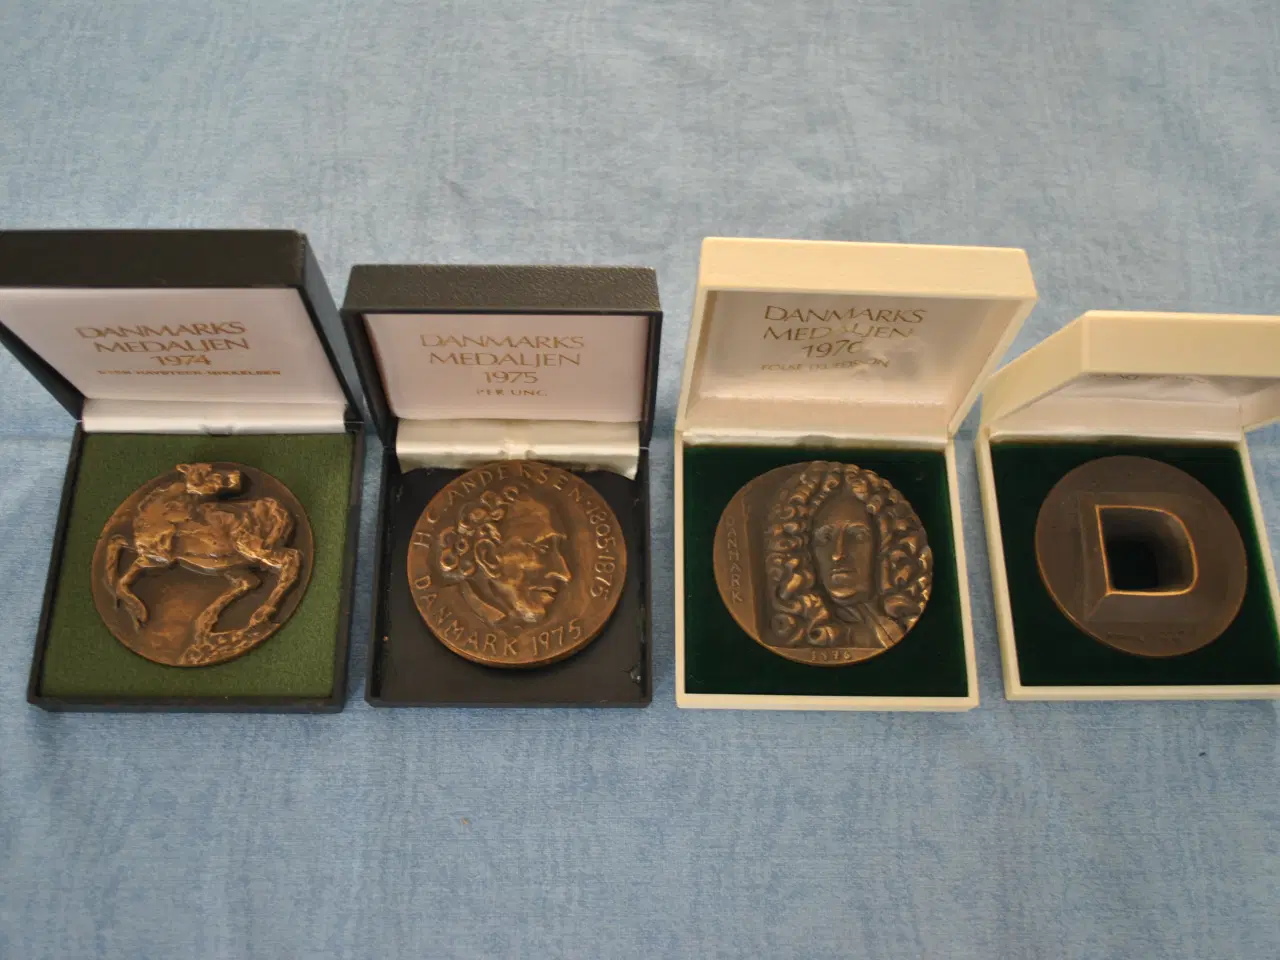 Billede 1 - Danmarks medaljer 1974 - 77